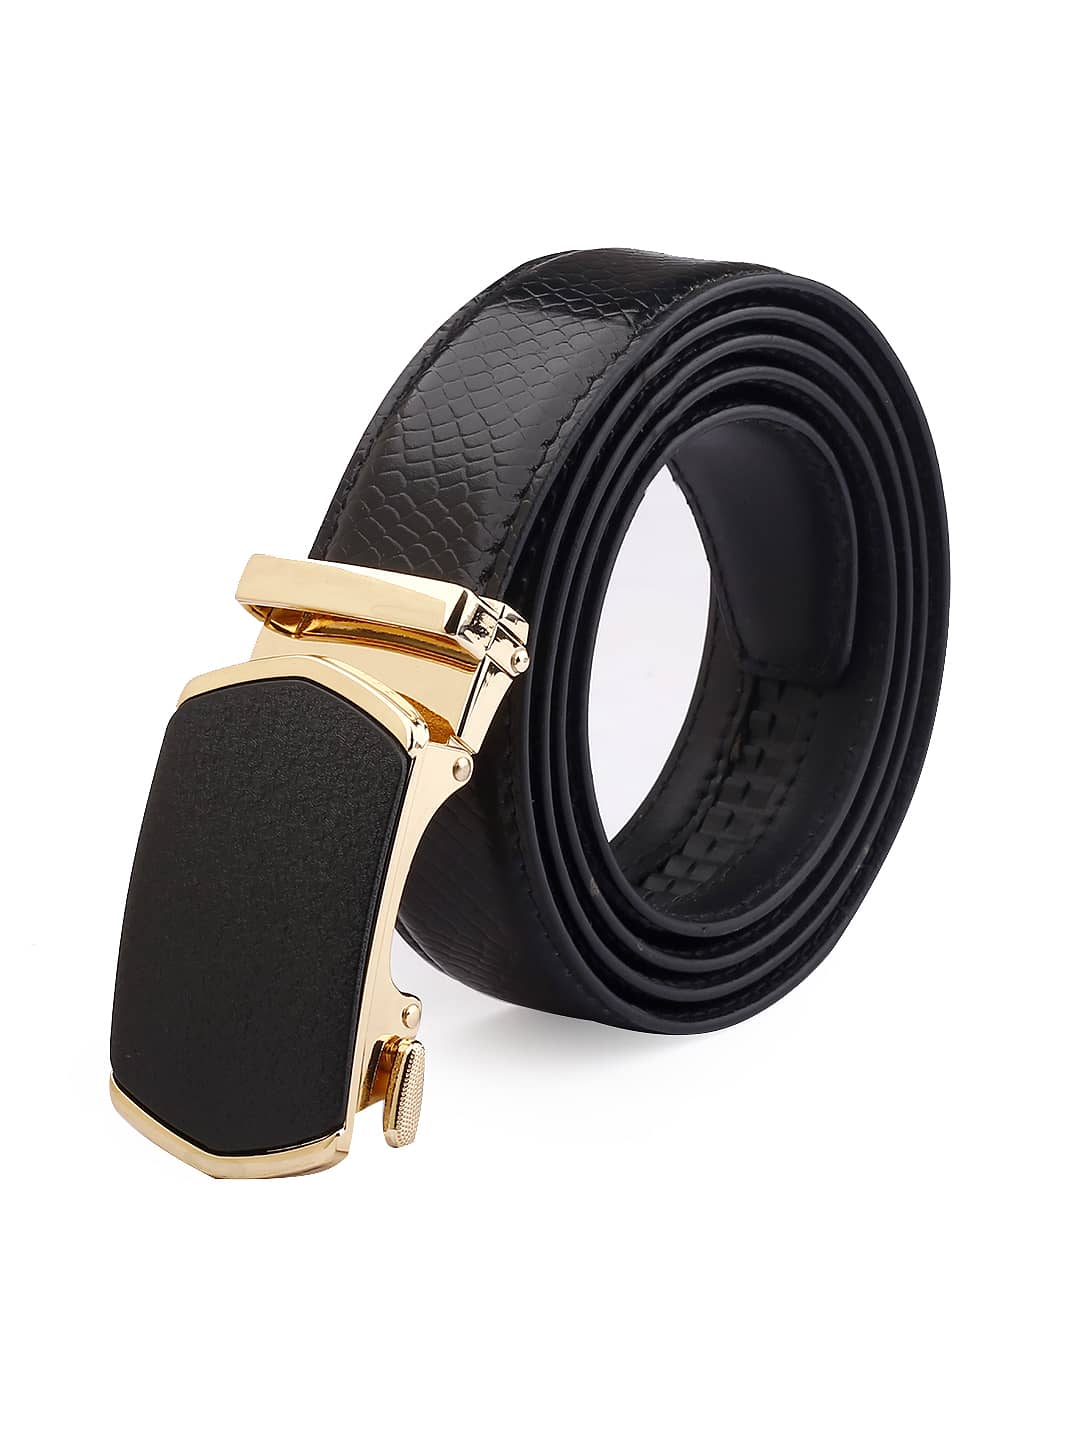 JingHao Mens Leather Belt,Plus Size Belts for Men,Pin Buckle Belt Great for  Jeans, Casual,Formal,Work Wear 28-64 Black Brown